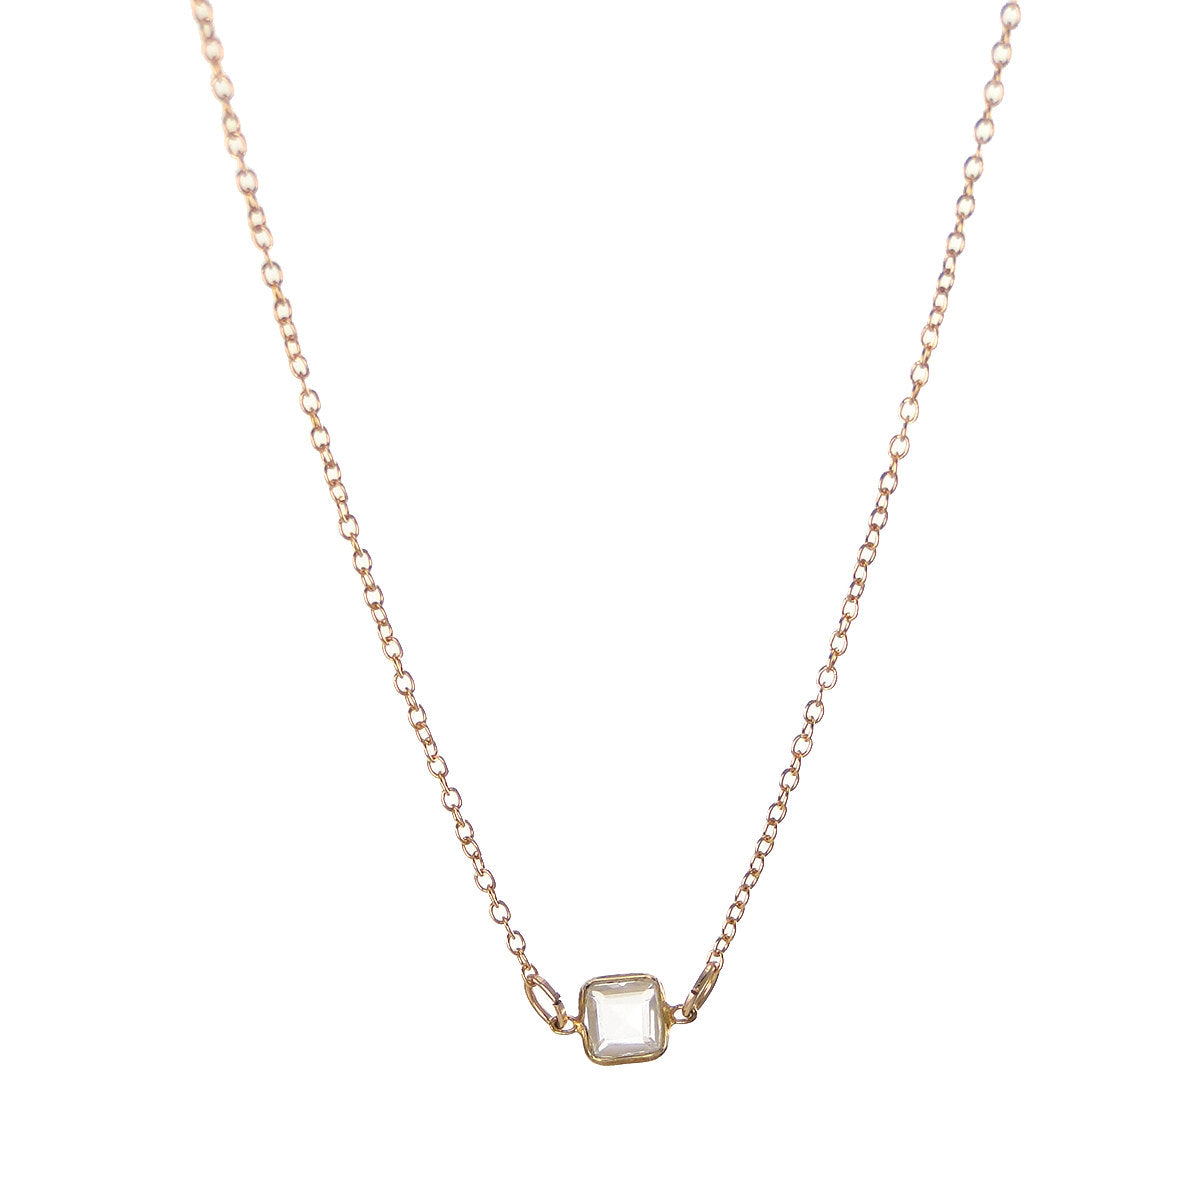 Crystal Quartz Necklace - Floating Diamond Necklace - Delicate Gem Necklace - Gemstone Necklace - Little Dainty 14K Gold Filled Necklace